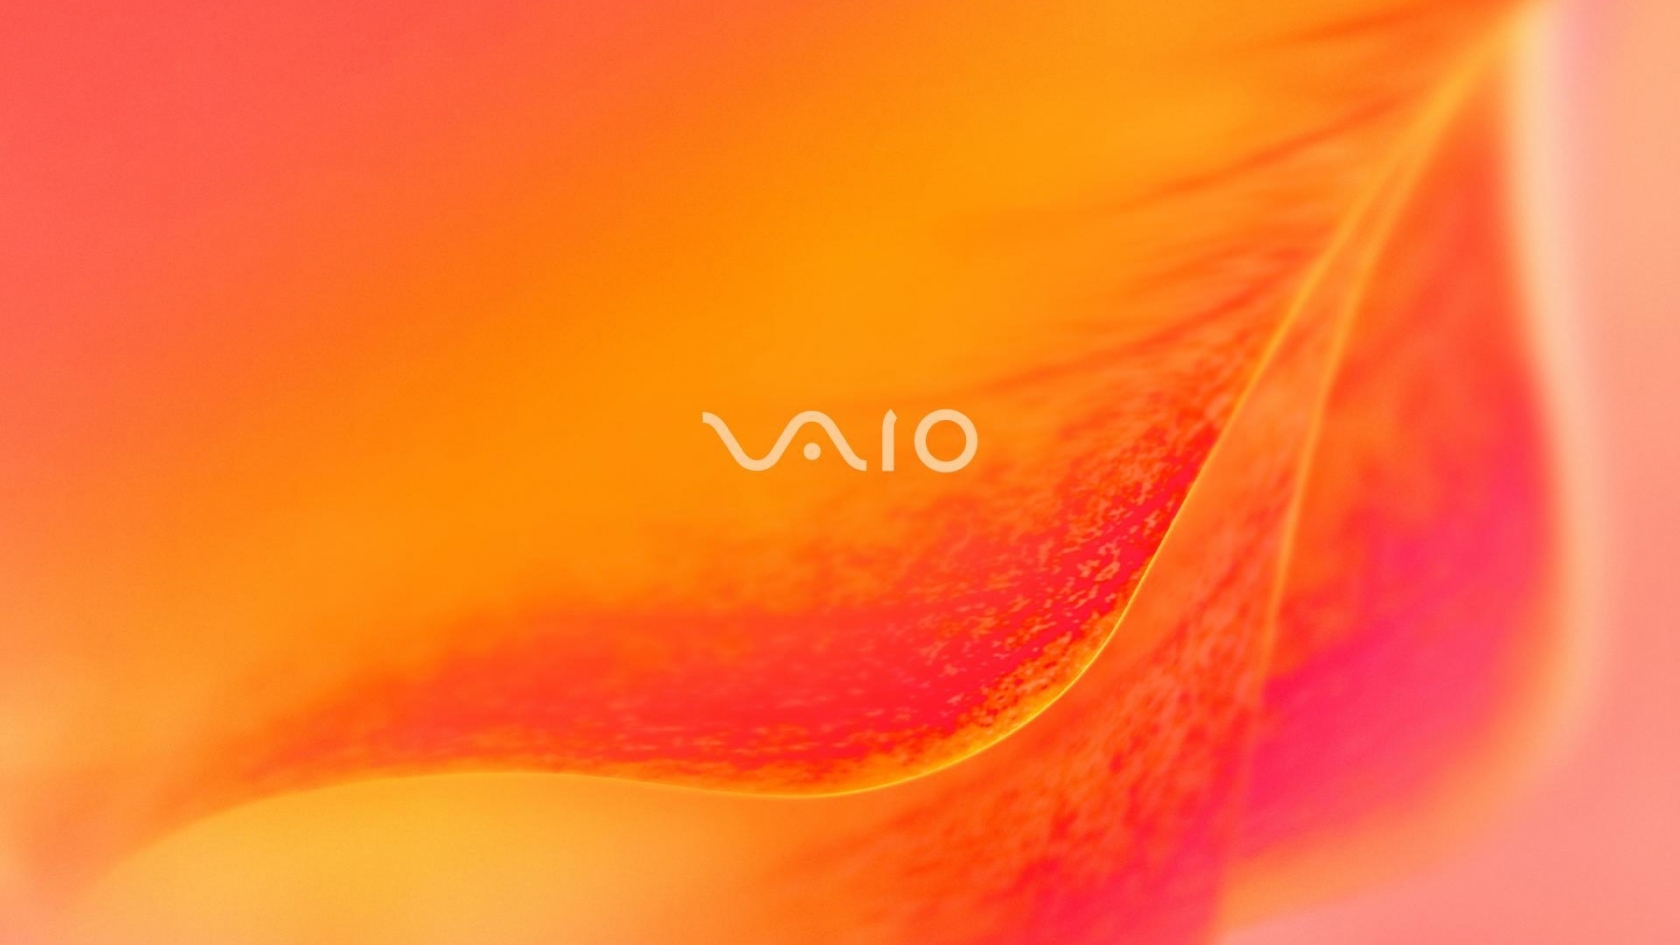 Sony Vaio Orange blossom for 1680 x 945 HDTV resolution